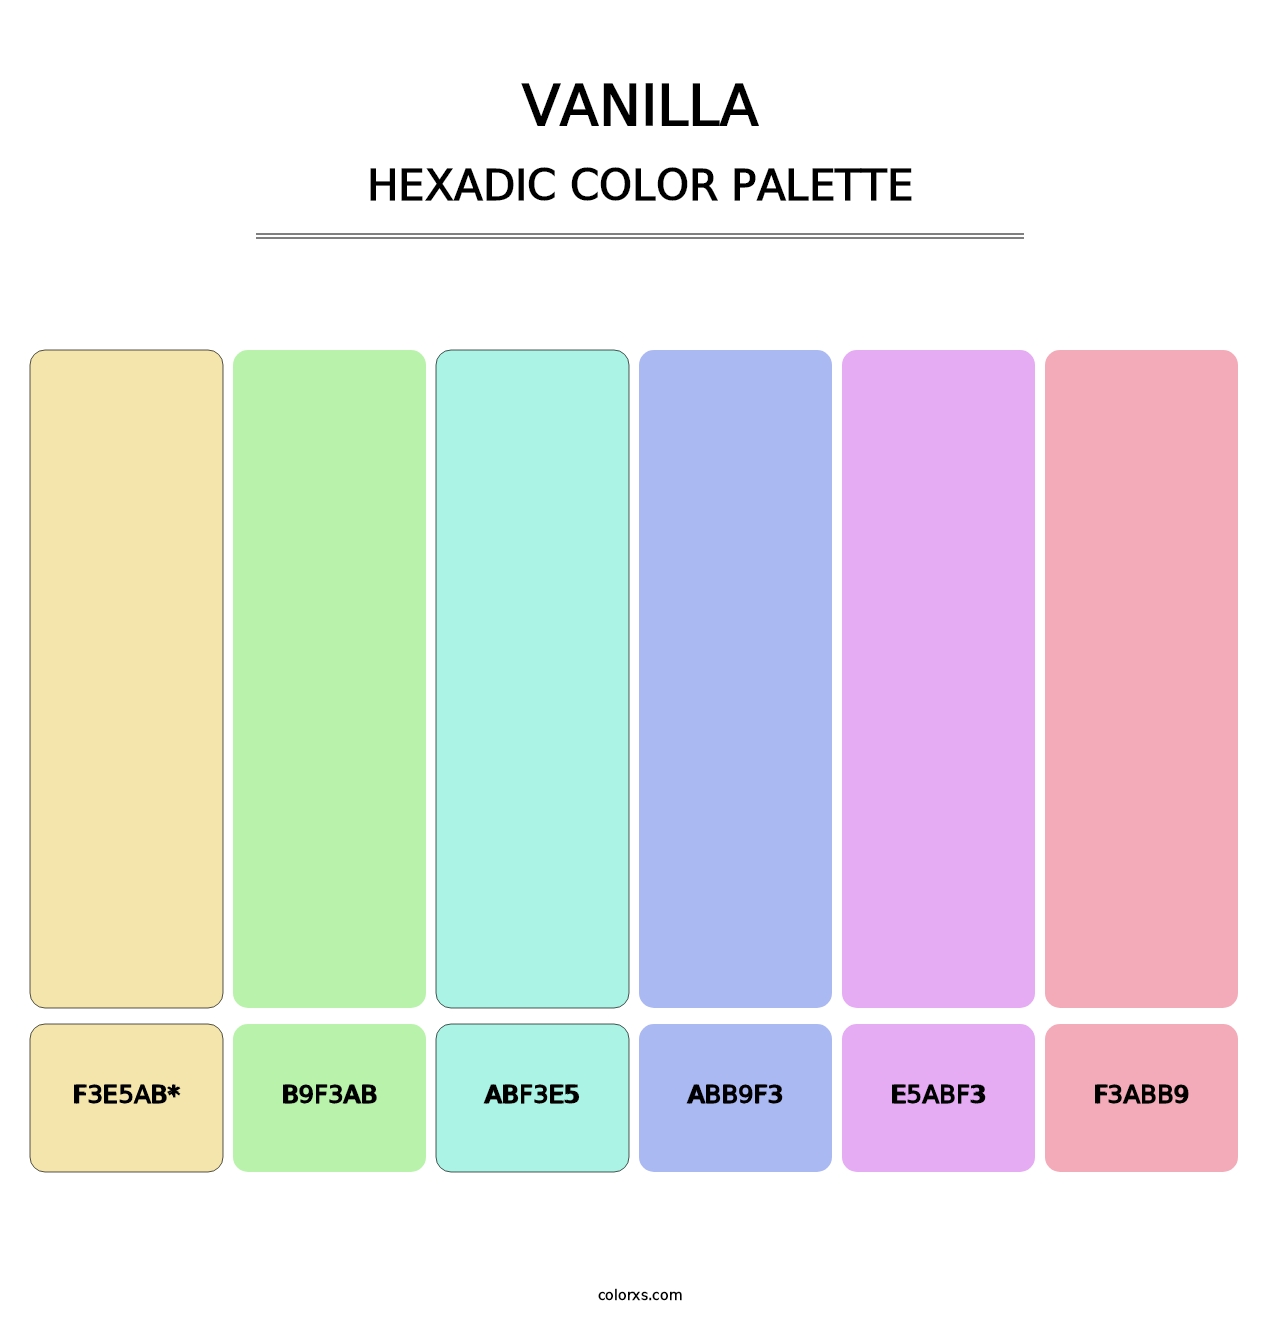 Vanilla - Hexadic Color Palette